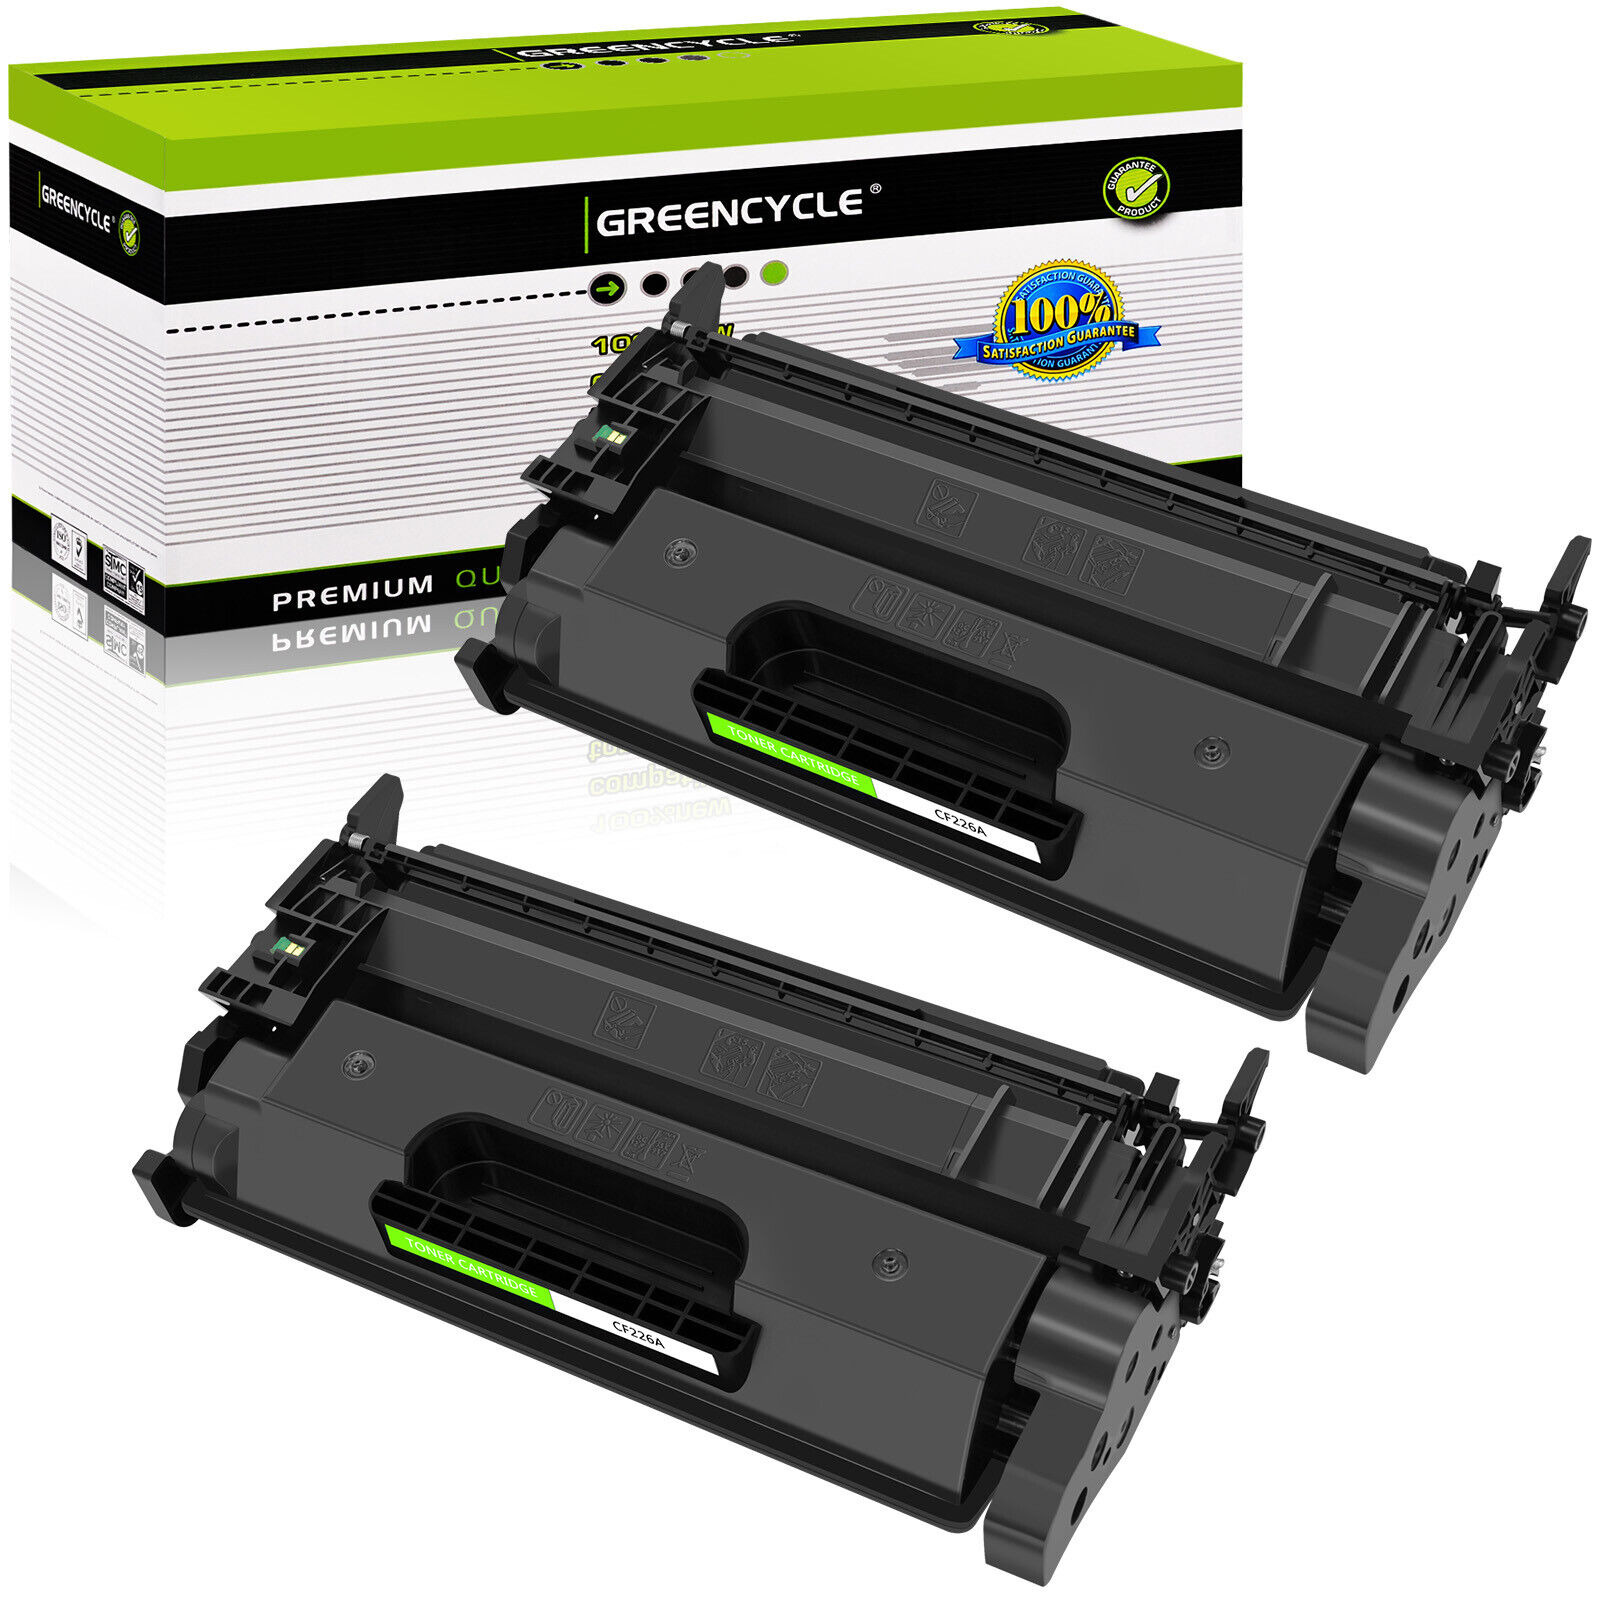 2× CF226A Ink Toner Cartridges fits HP 26A LaserJet Pro M402dn M426fdw MFP Black